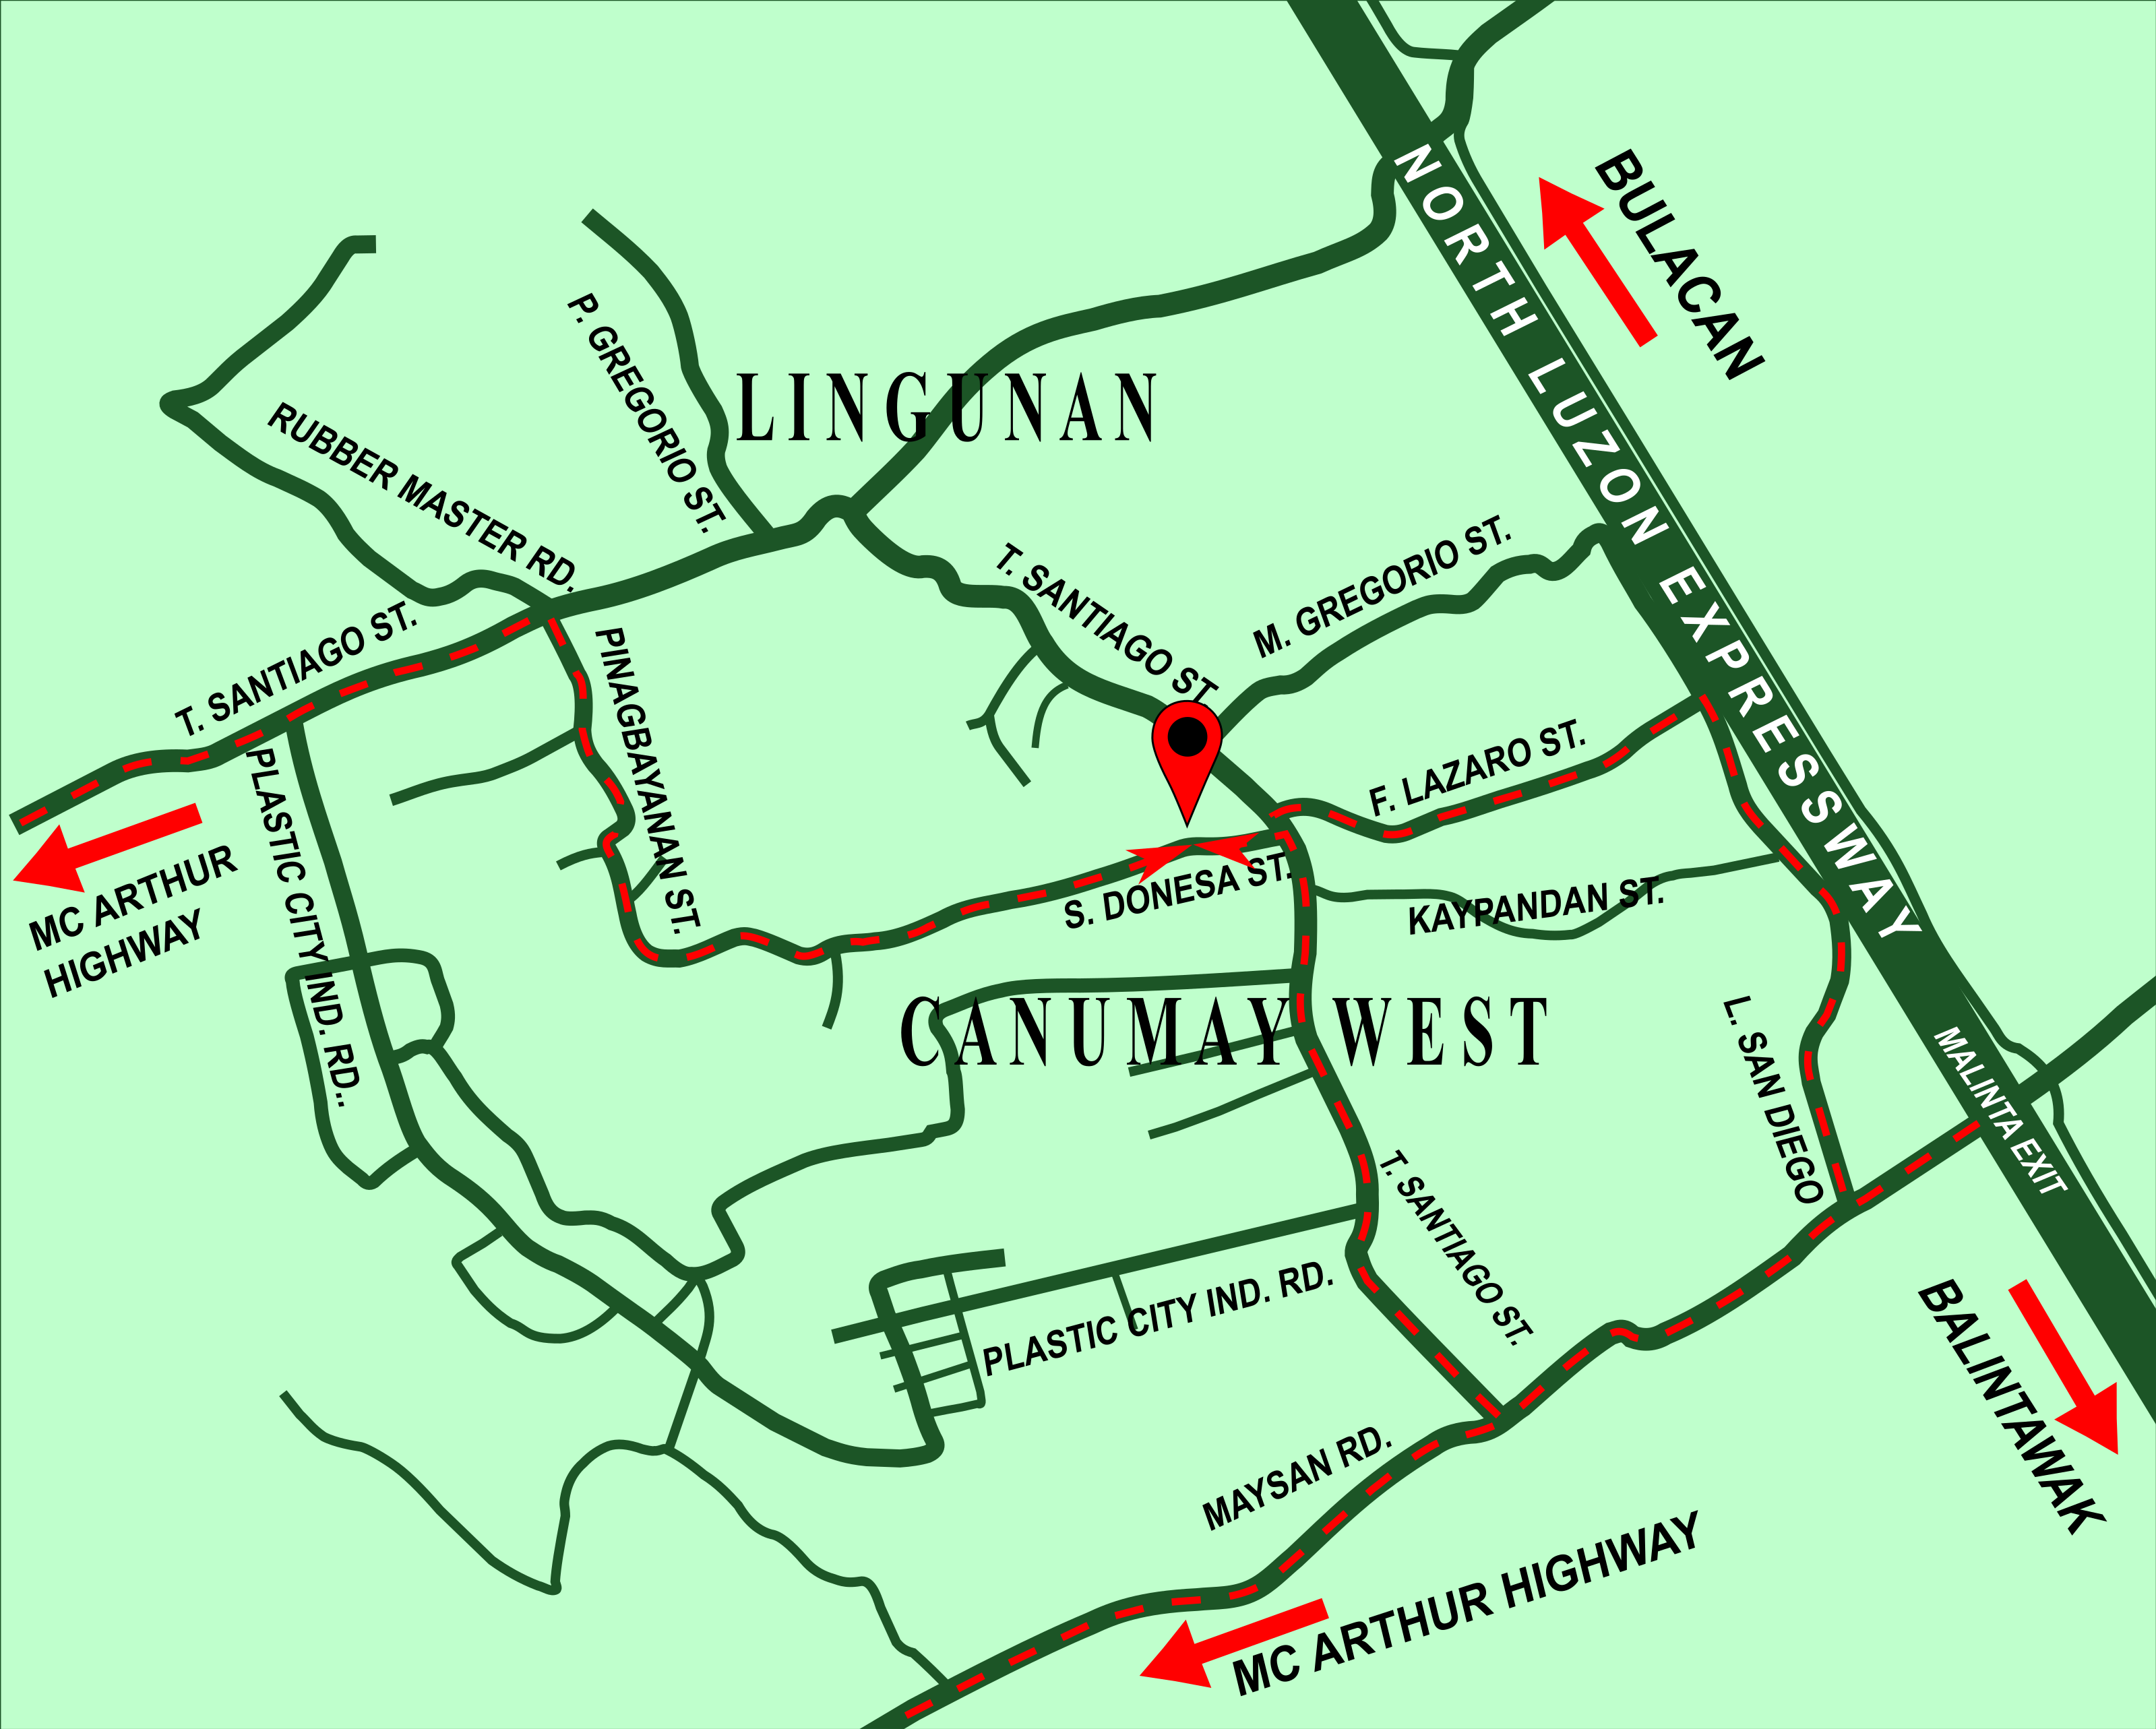 TOPWAY LOCATION MAP